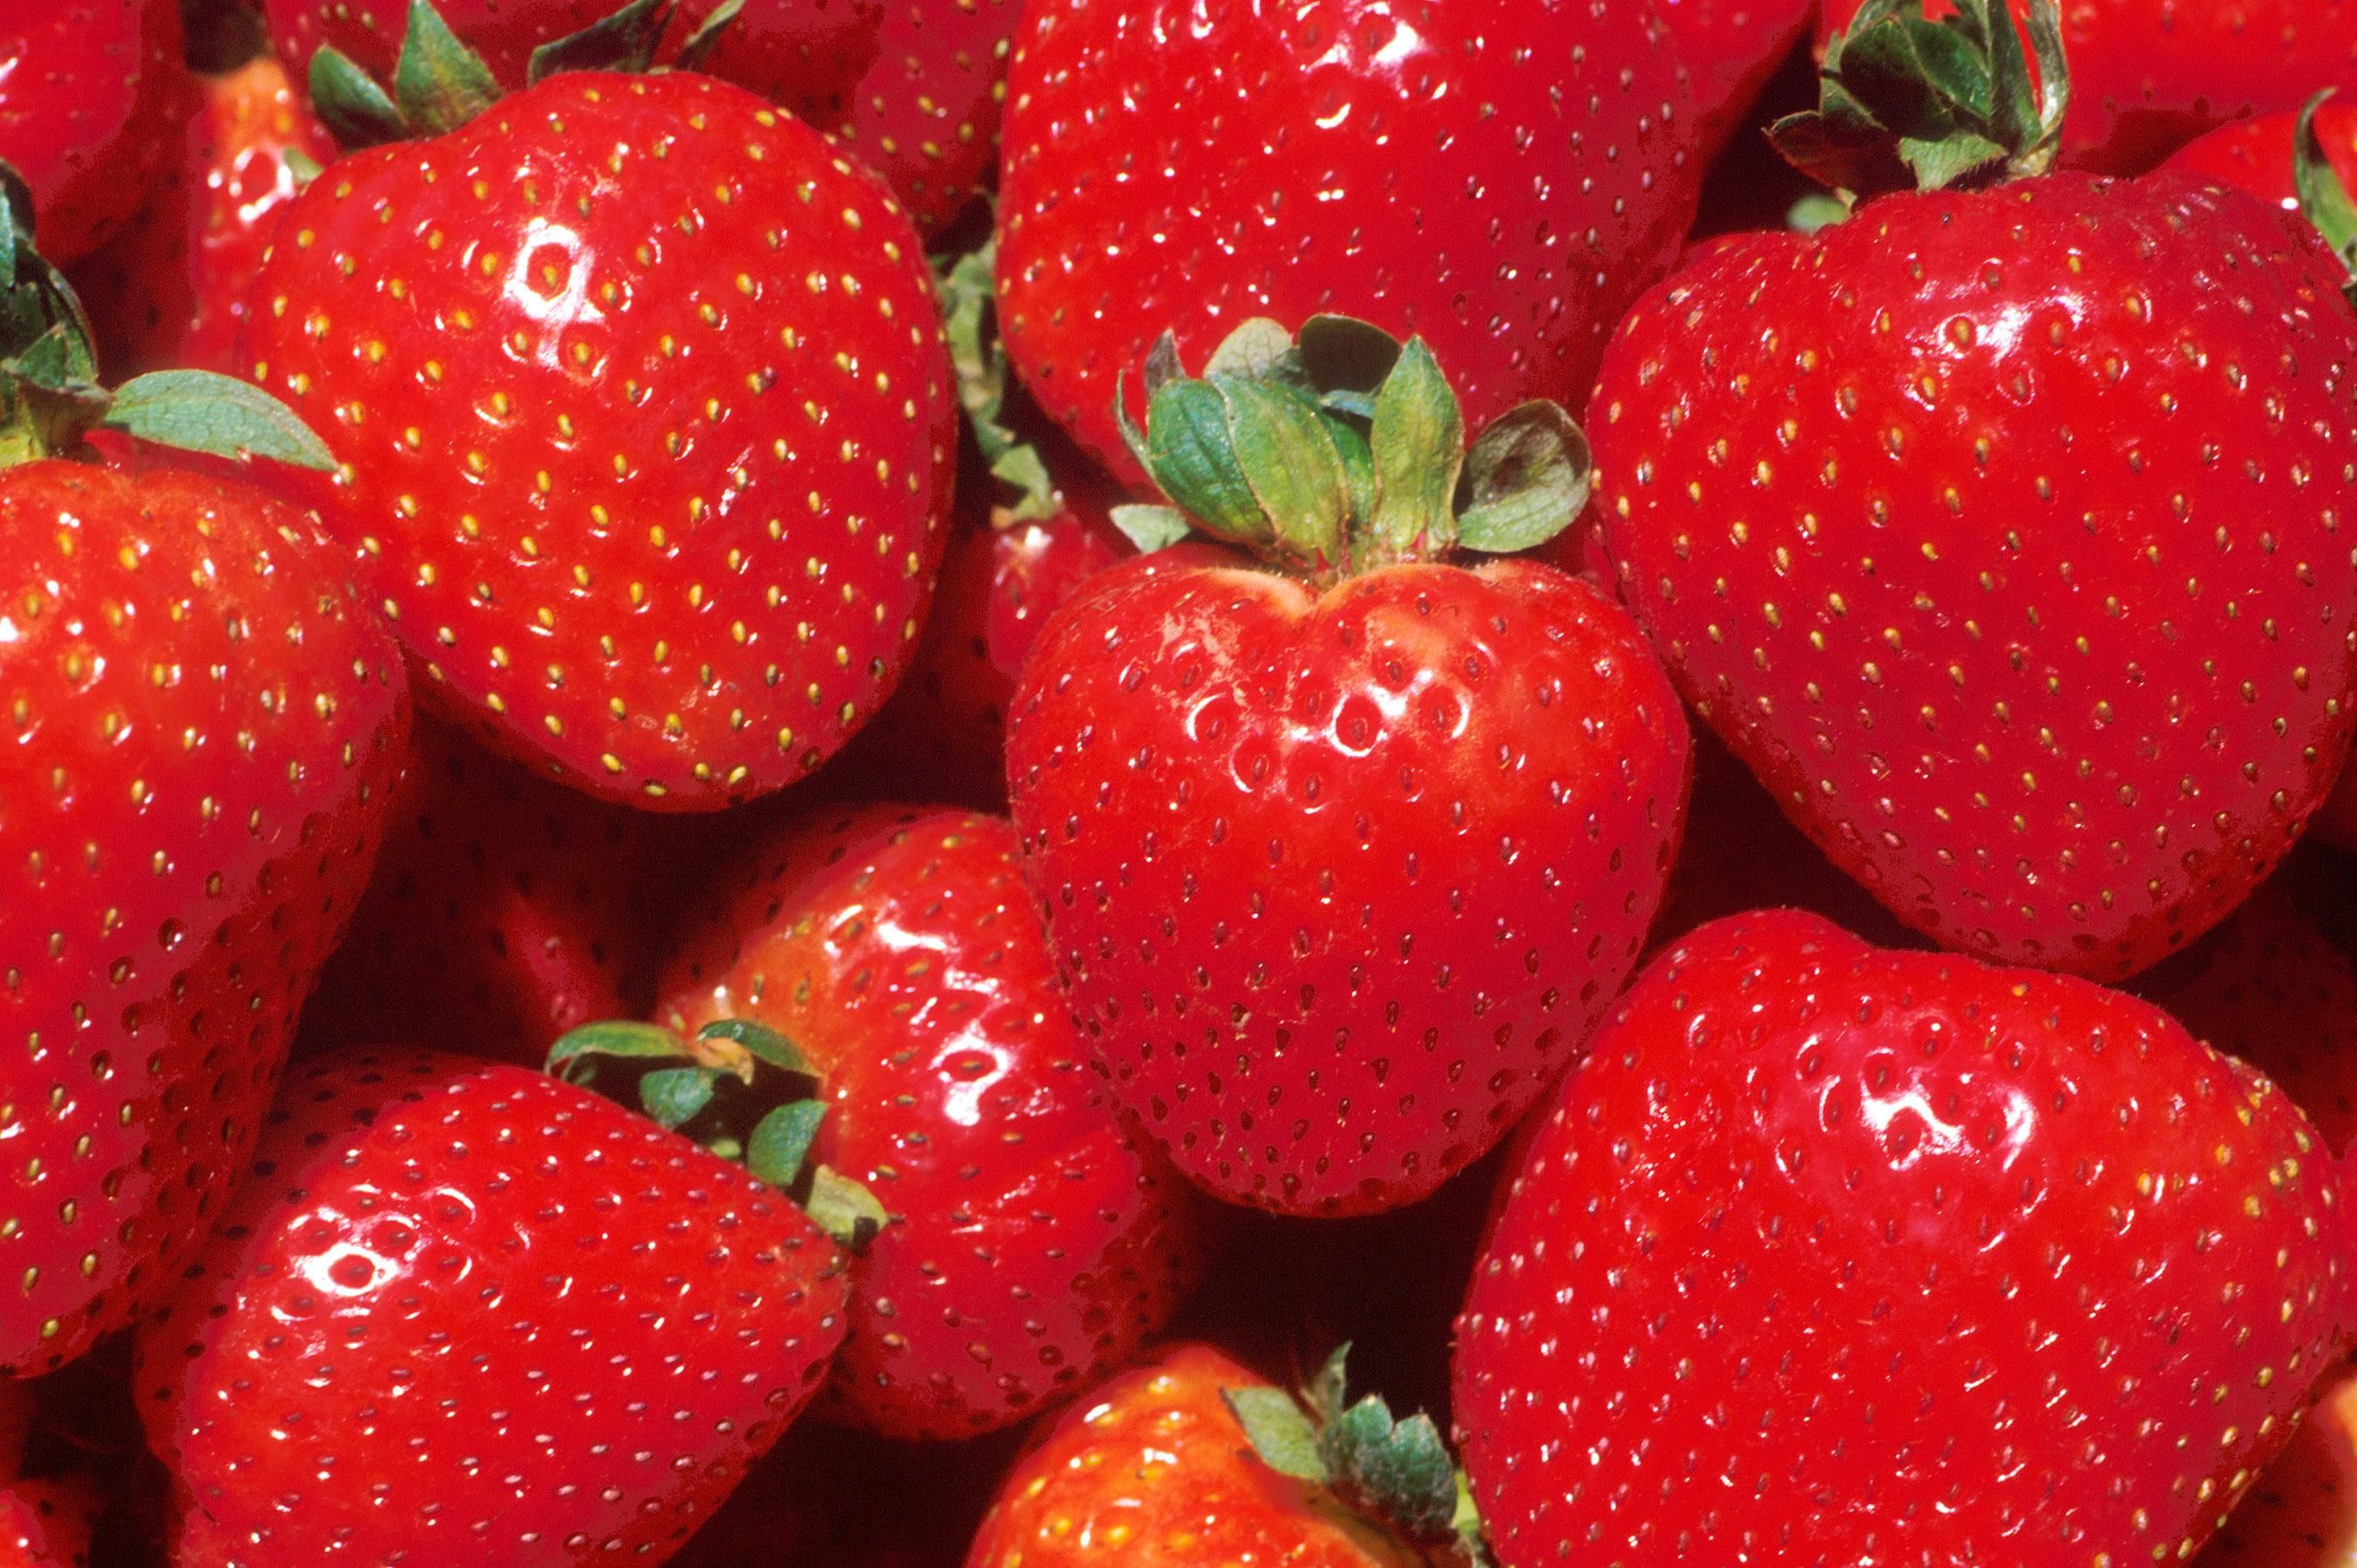 File:Strawberries close up.jpg - Wikimedia Commons